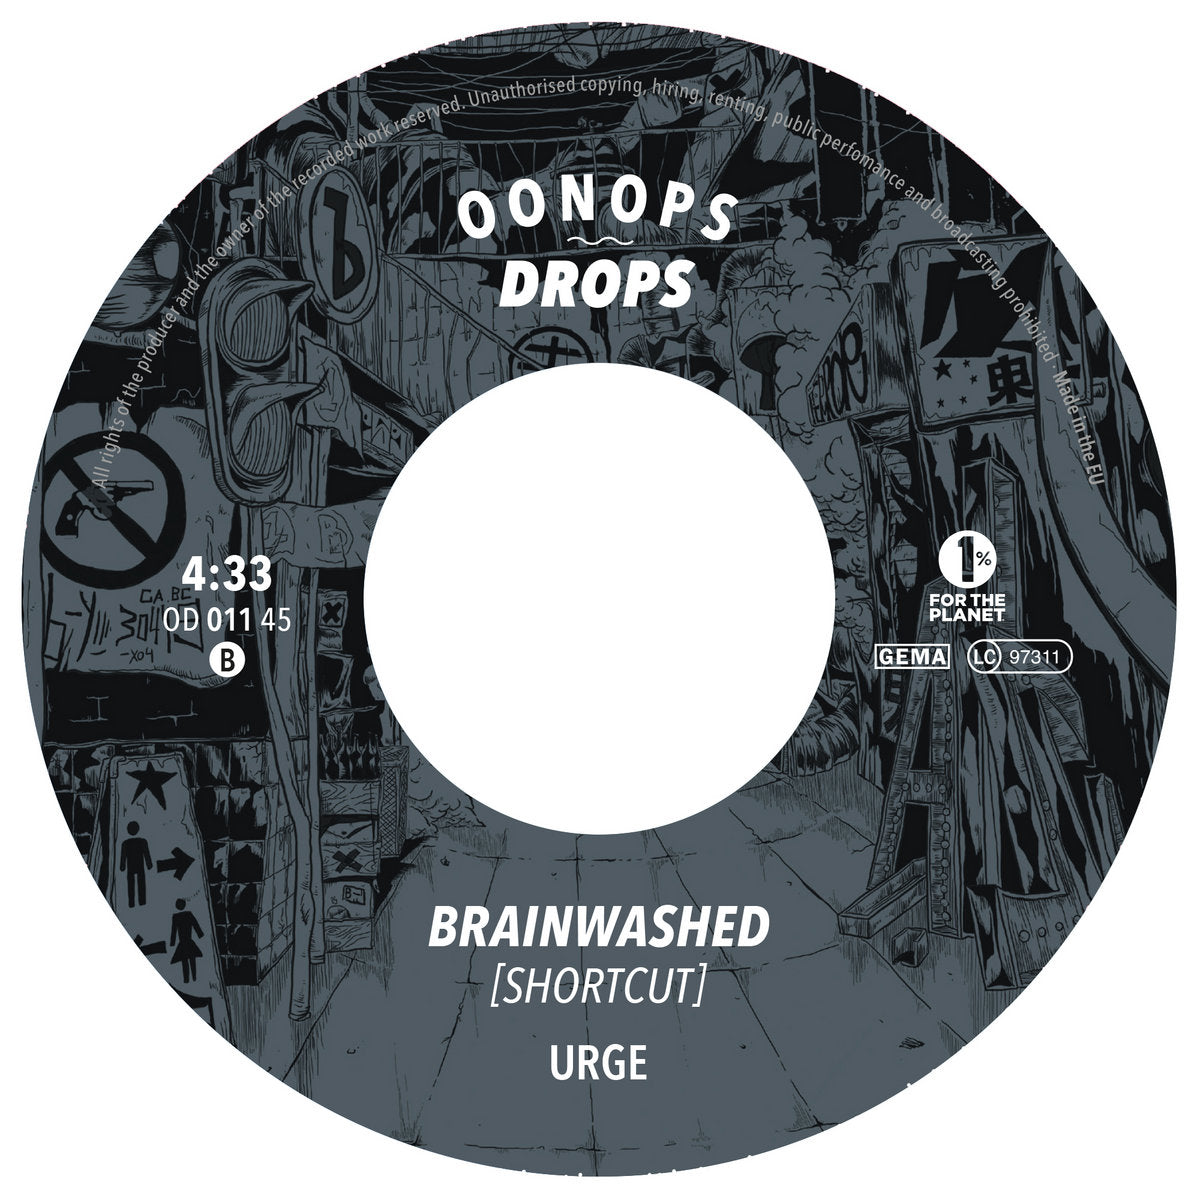 Urge feat. Abdominal & DJ Robert Smith - Brainwashed (Smoove Remix) b/w Brainwashed